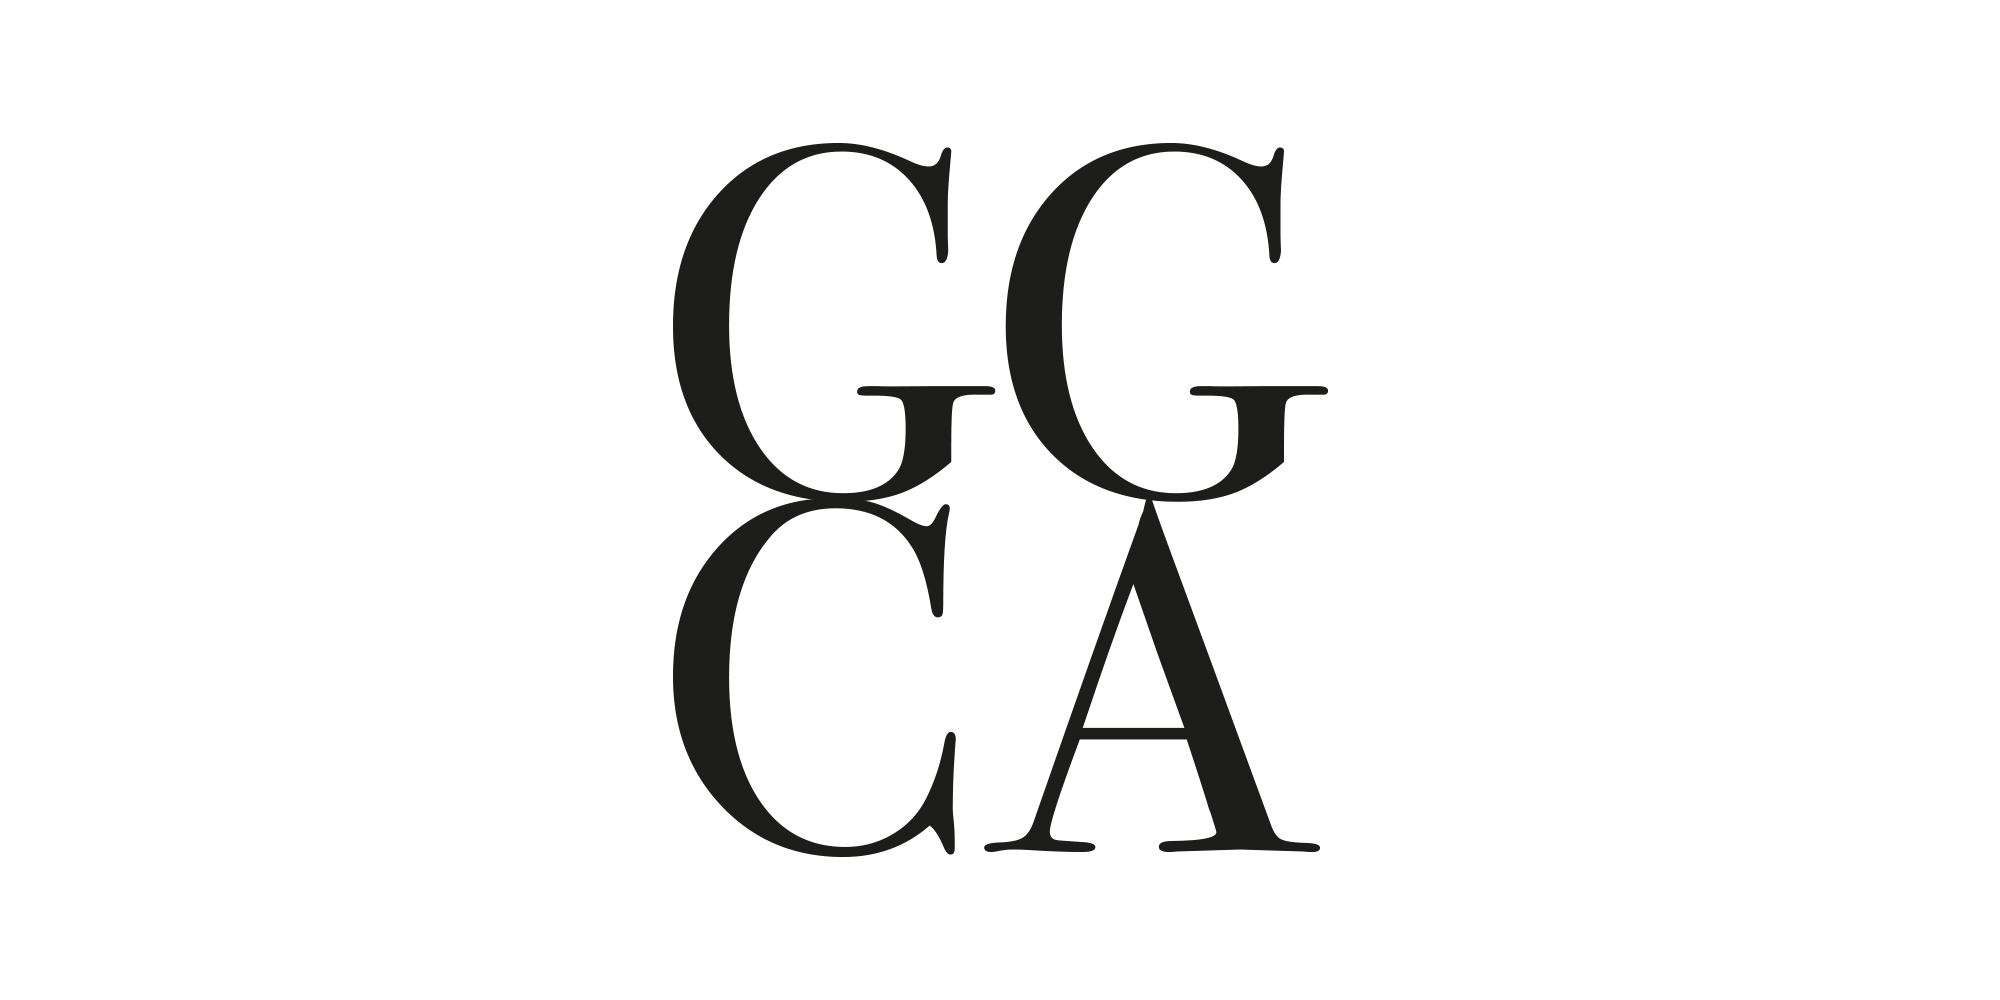 ggca creative agency